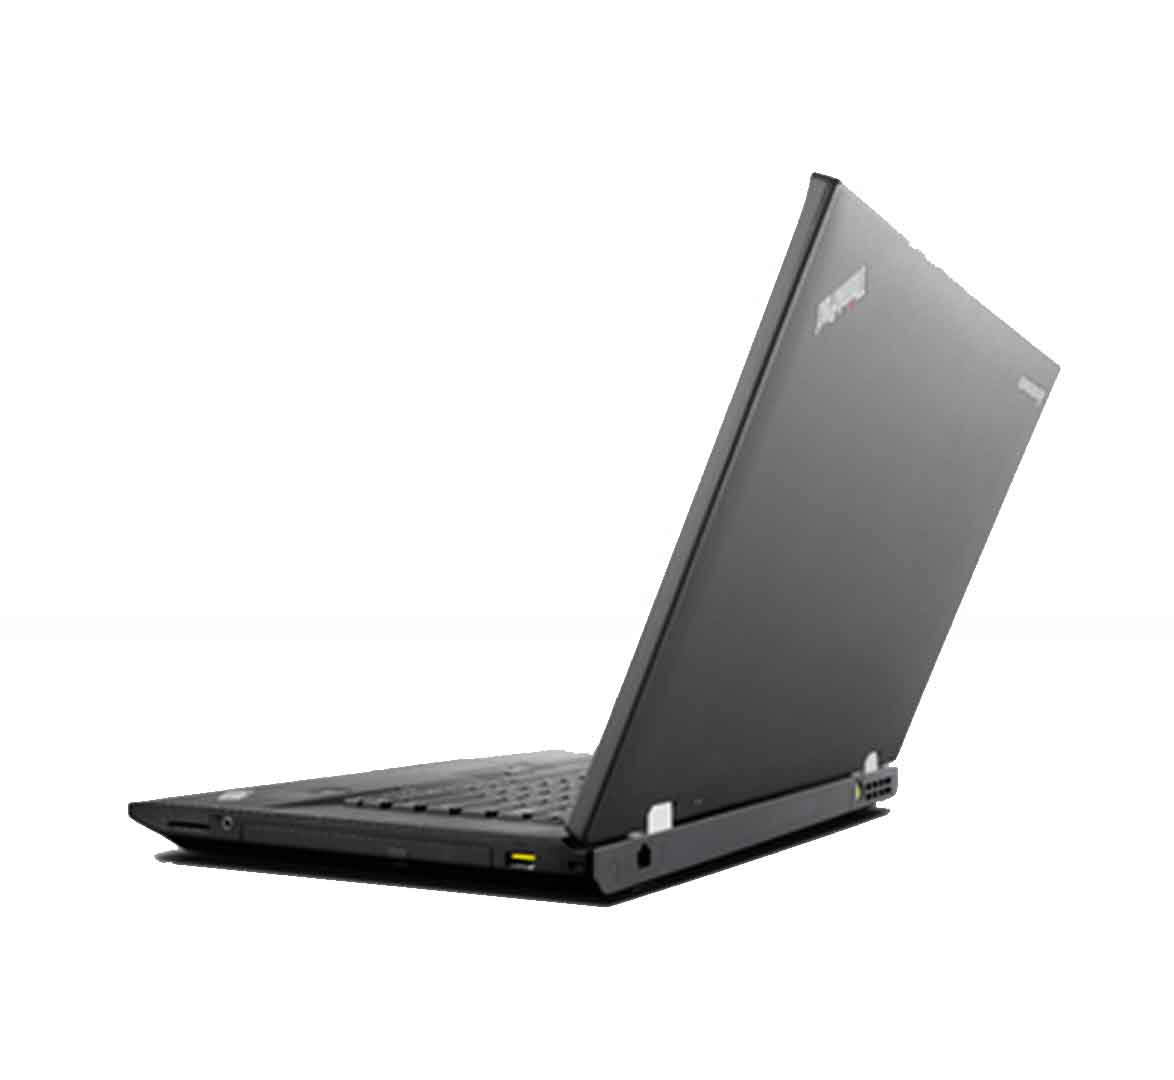 Lenovo ThinkPad L430 Business Laptop, Intel Core i5-3rd Generation CPU, 8GB RAM, 500GB HDD, 14 inch Display, Windows 10 Pro, Refurbished Laptop